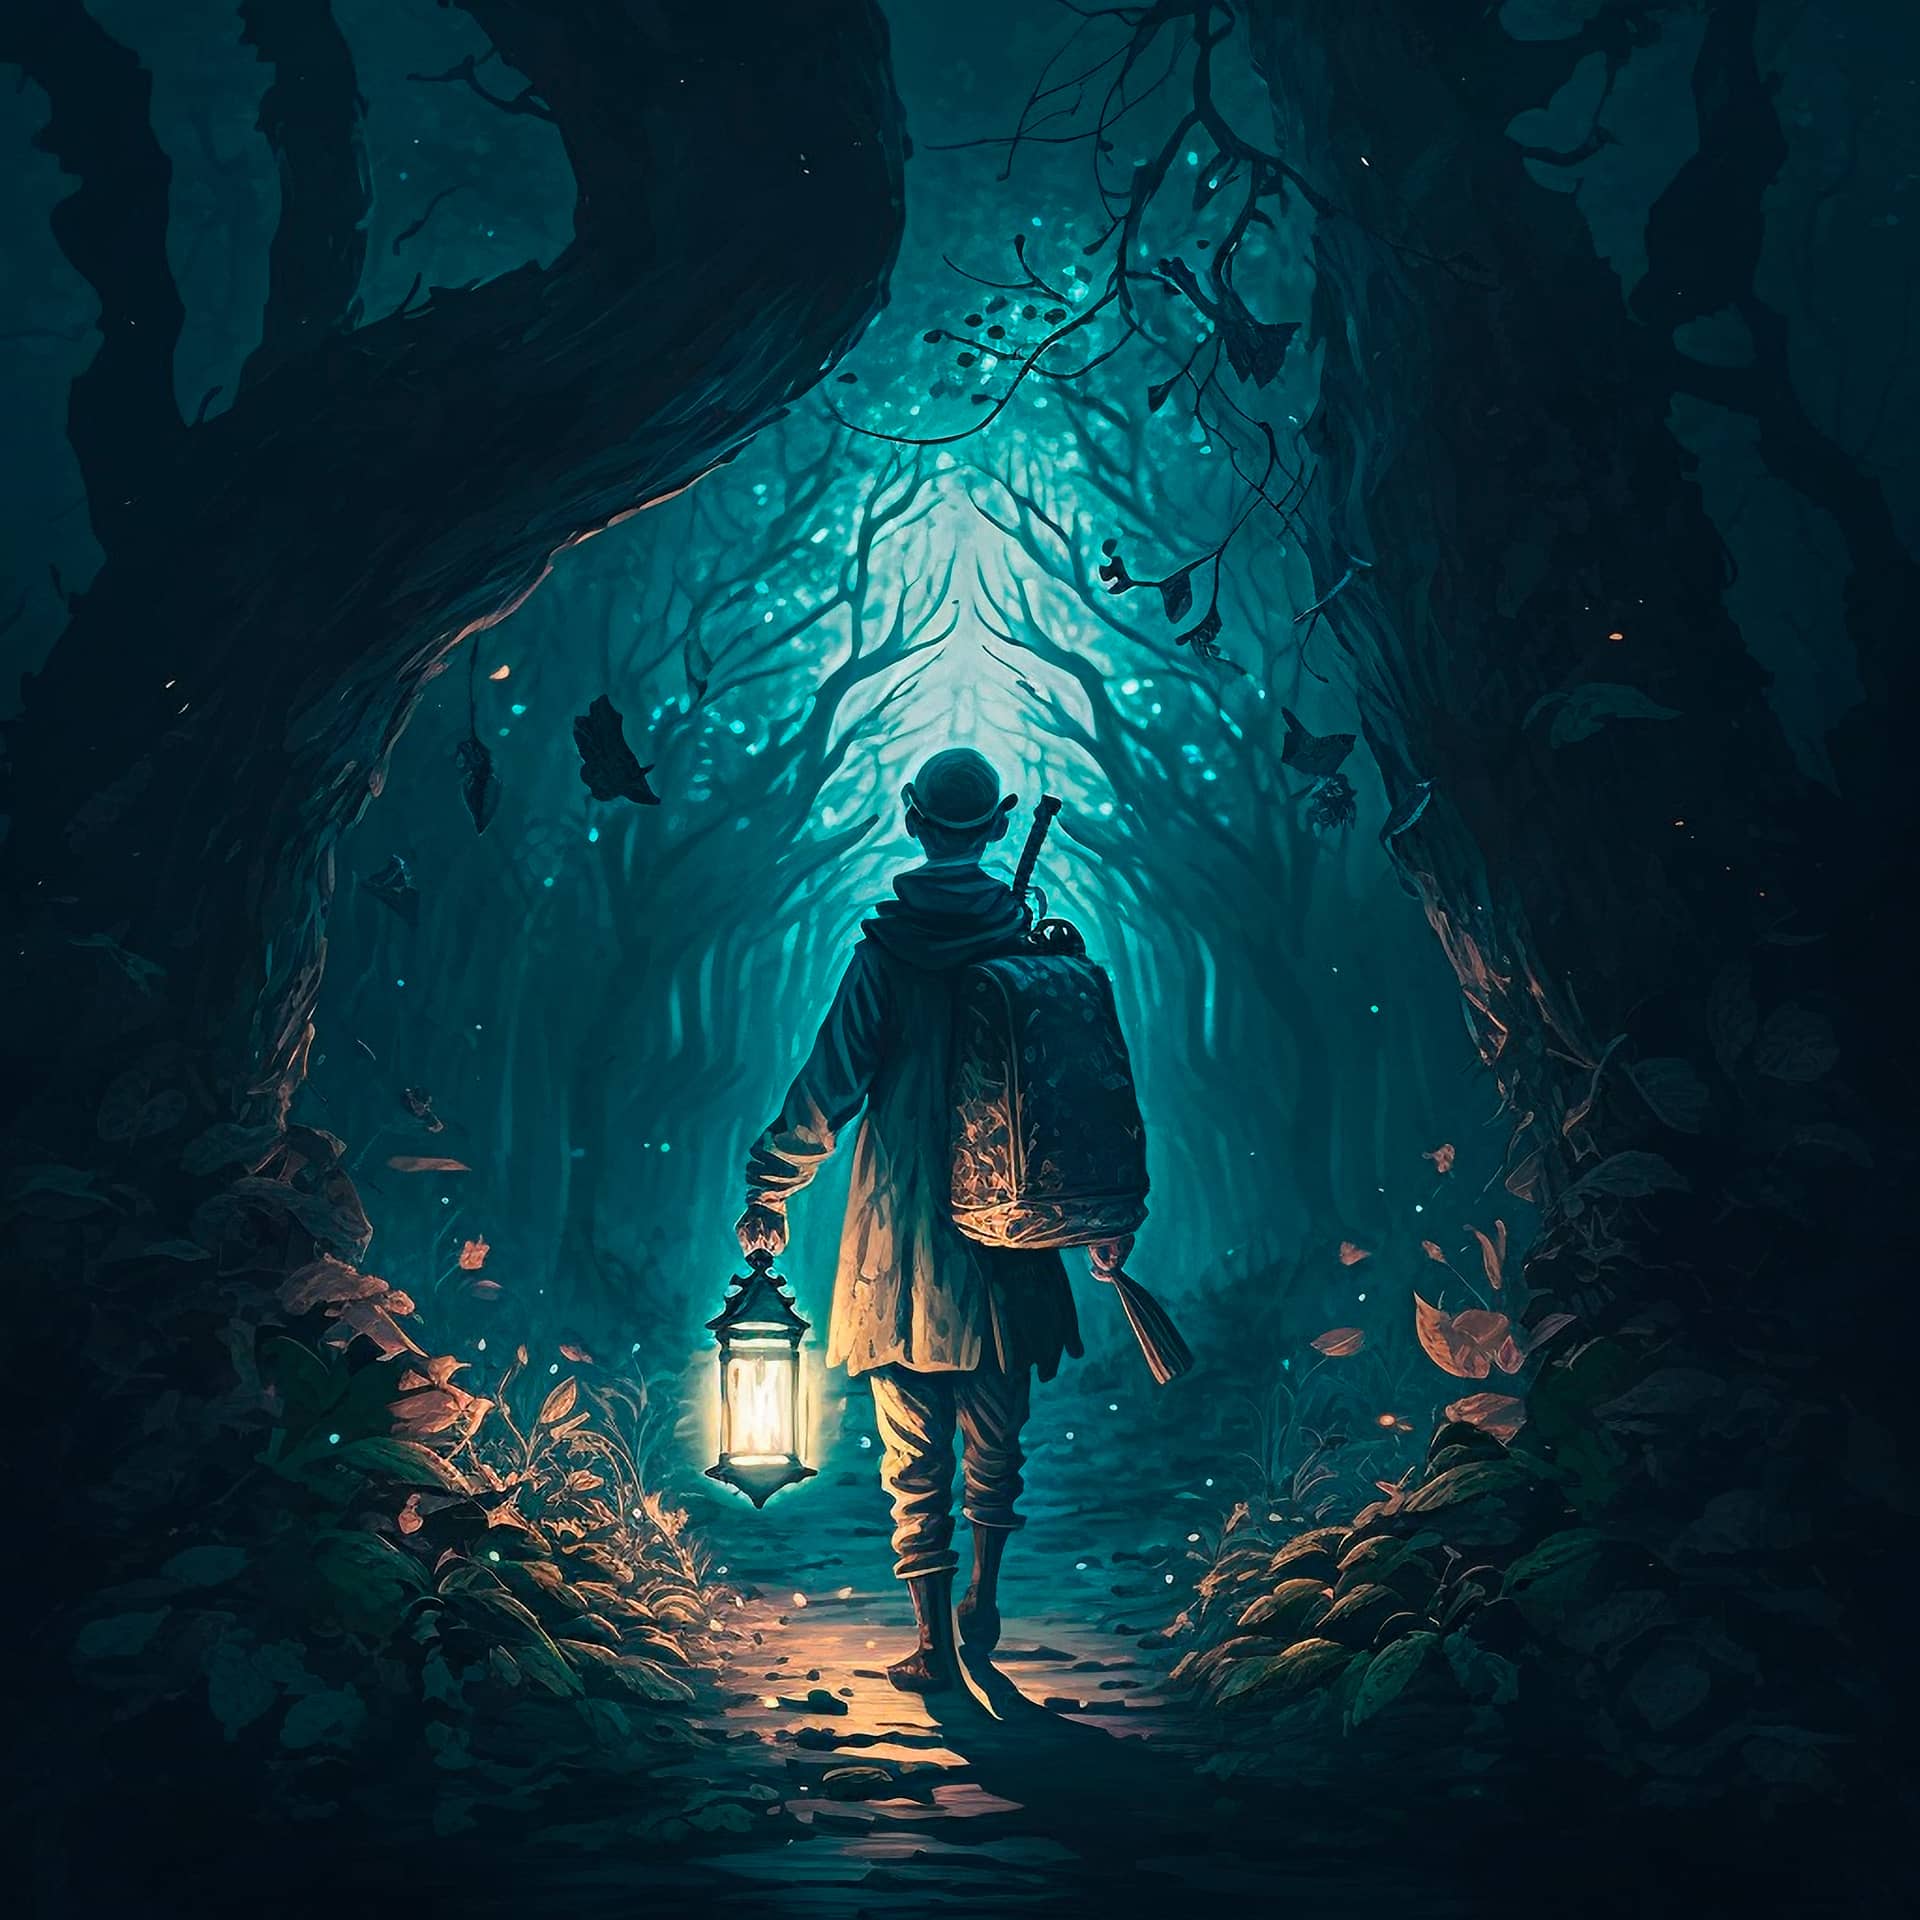 Man walks night lighting his way with lamp